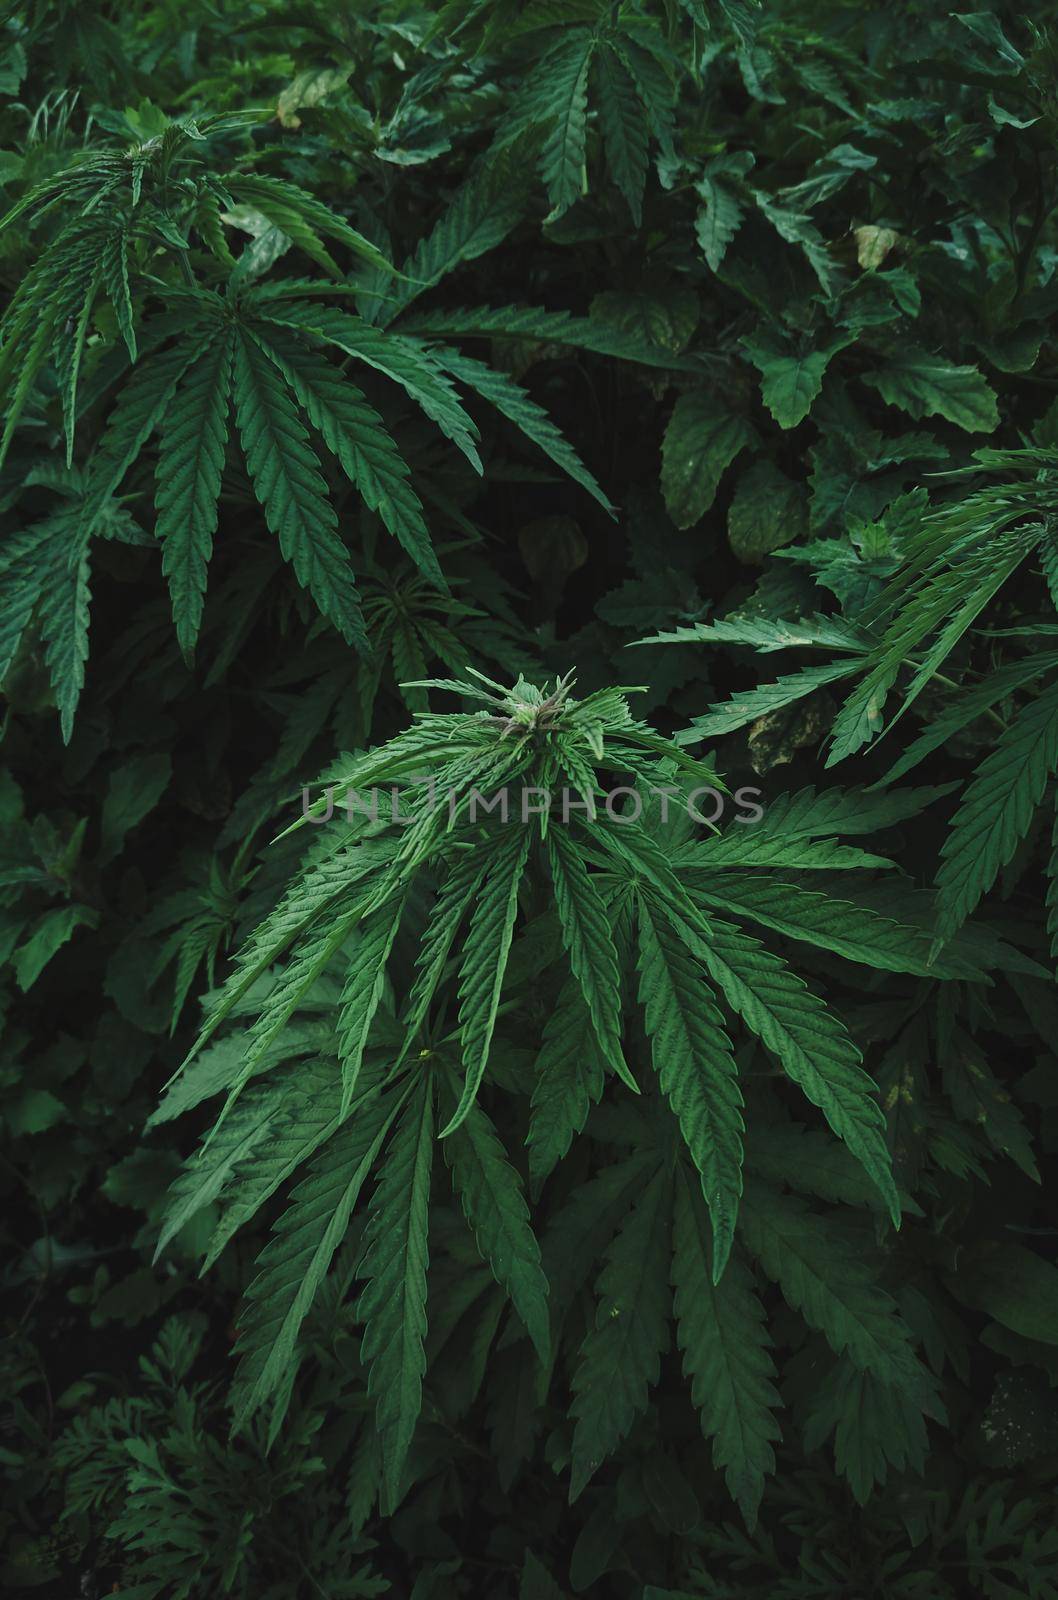 Close-up plantation wildly growing cannabis in nature. Growing cannabis. Hemp plant growing wild by artgf